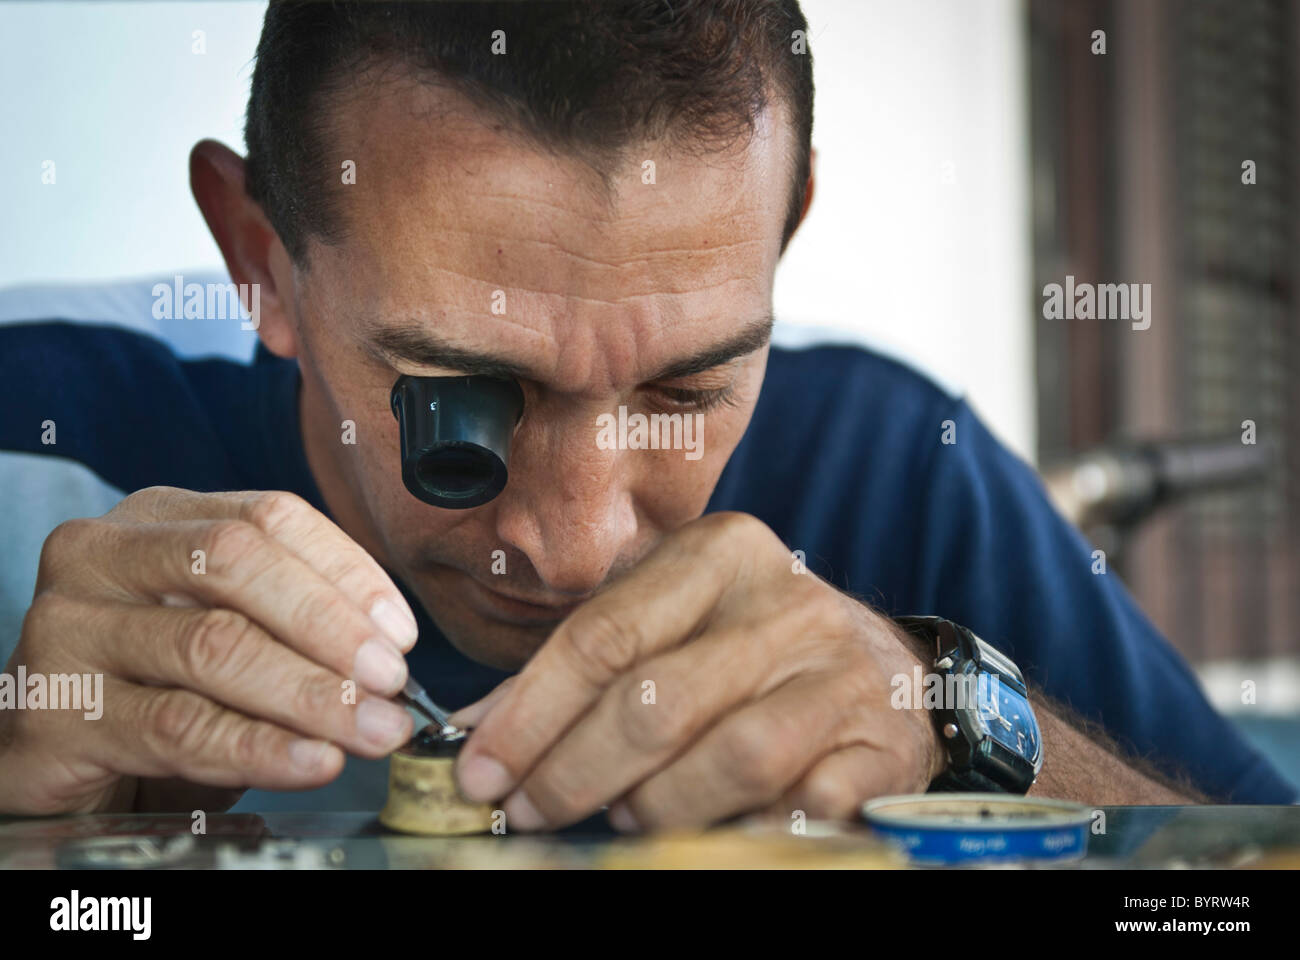 Uomo che ripara un orologio con un monocolo. Santiago de Cuba